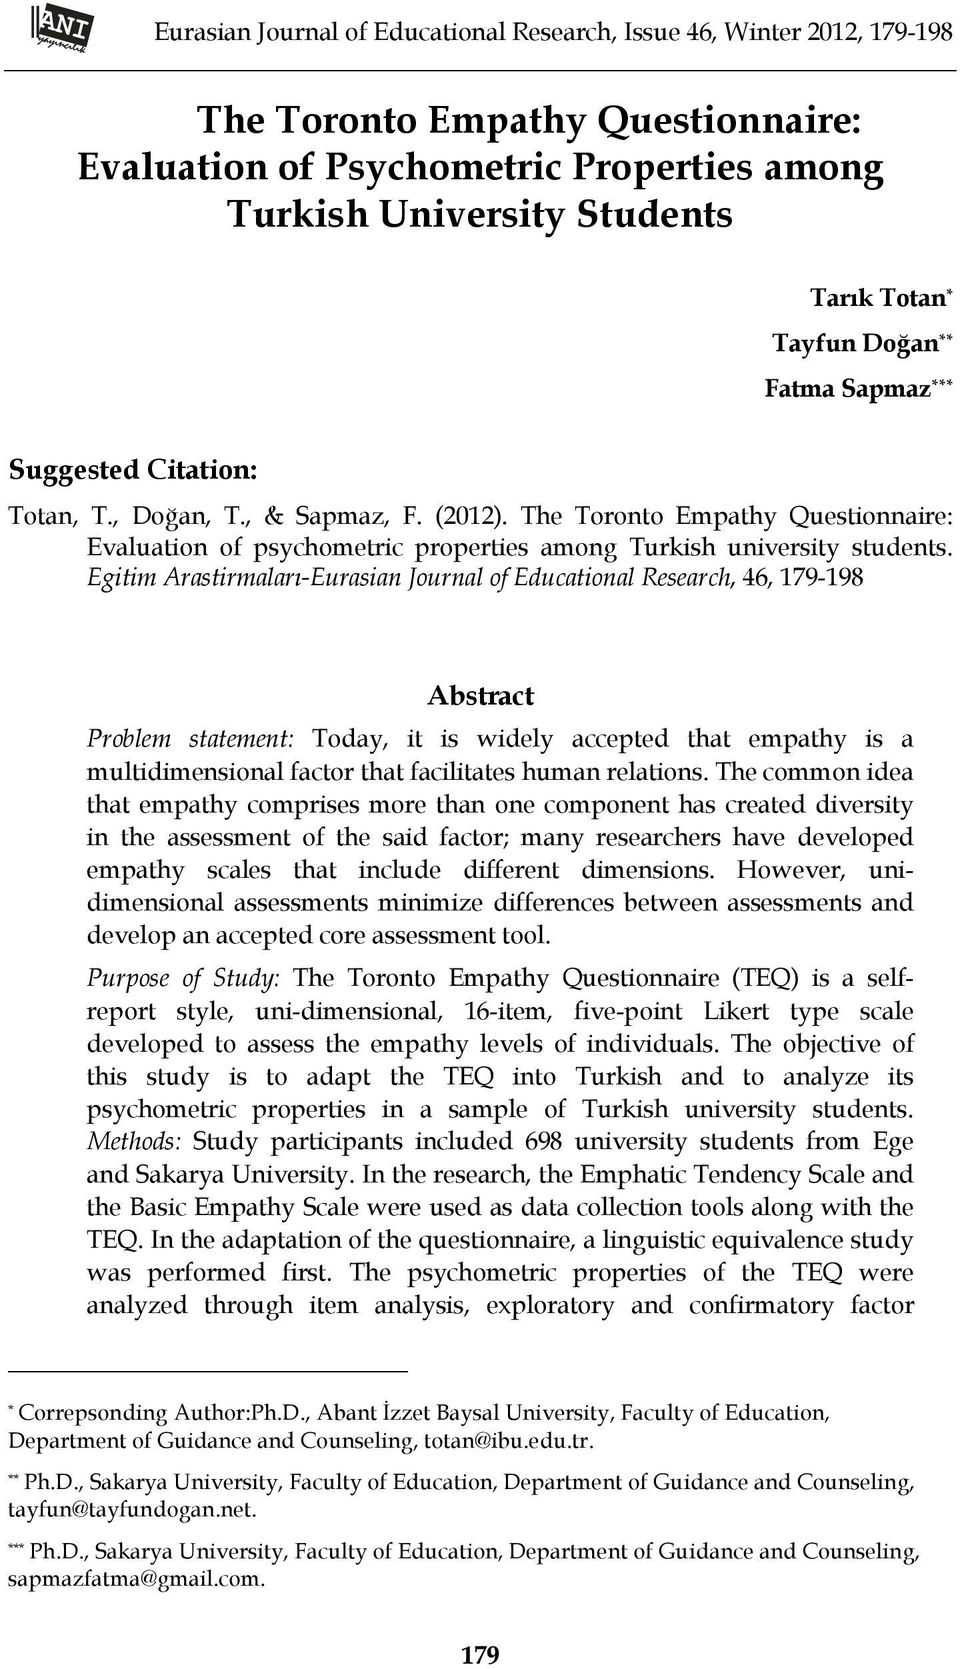 The Toronto Empathy Questionnaire: Evaluation of psychometric properties among Turkish university students.